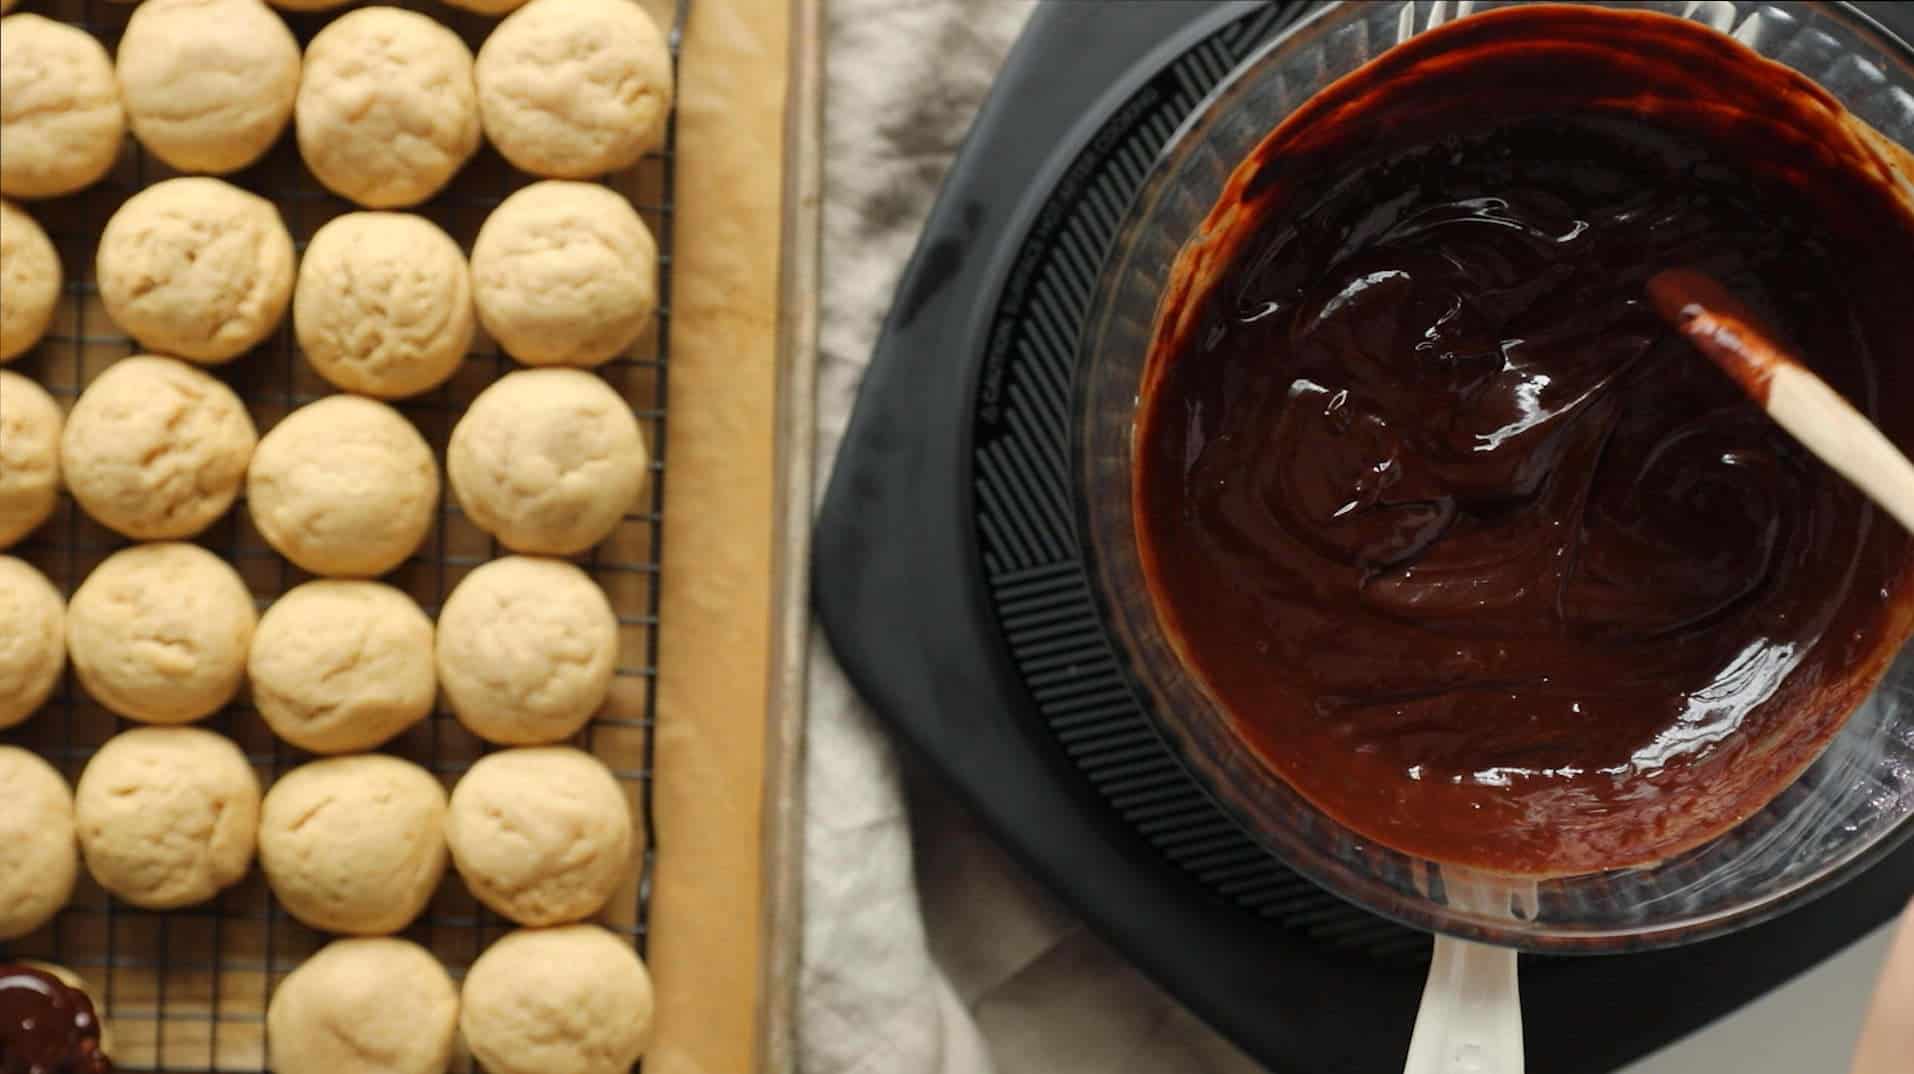 Ina Garten's semi sweet chocolate Ganache to glaze soft peanut butter cookies